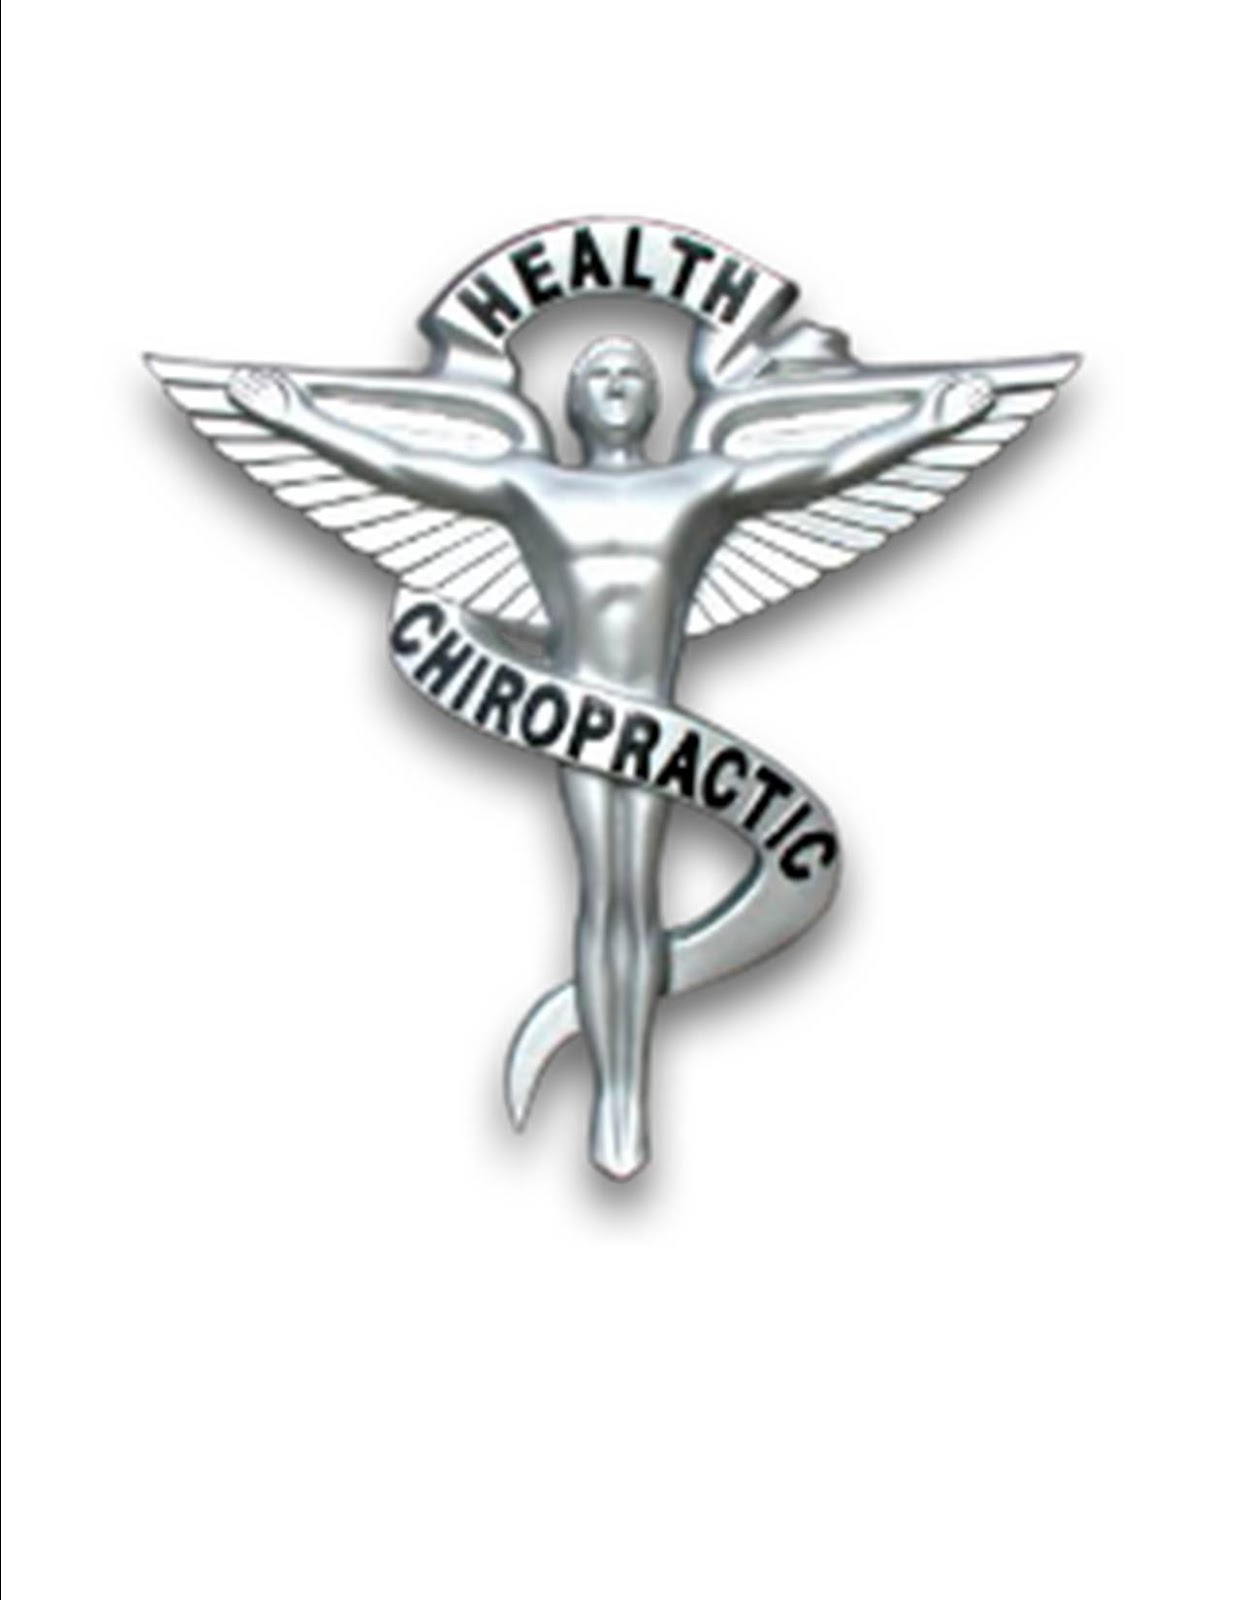 free chiropractic logo clip art - photo #40